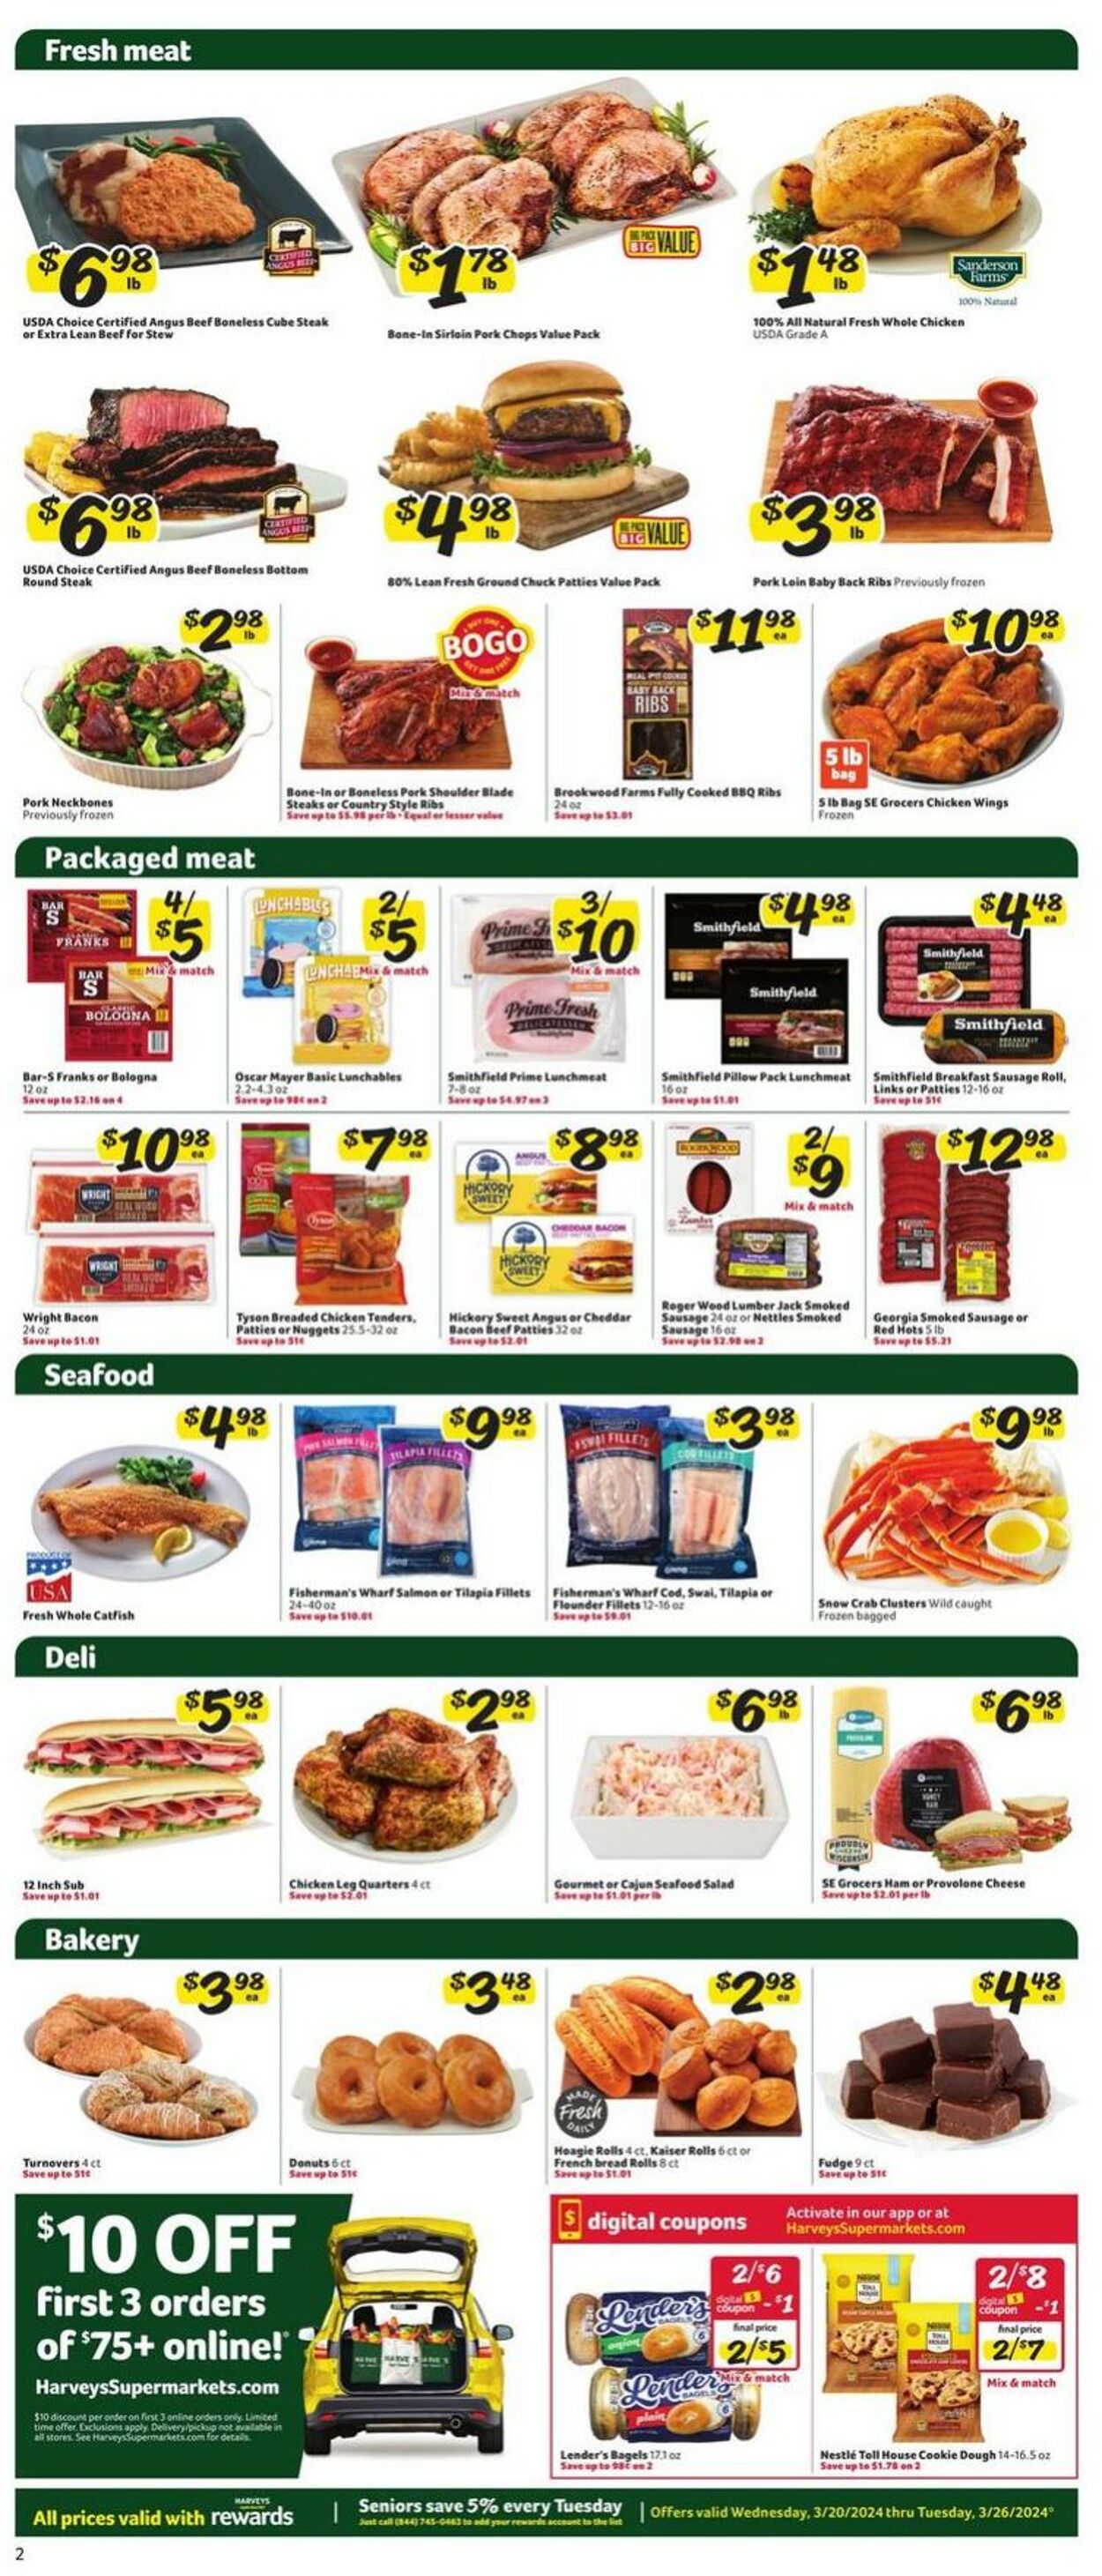 Weekly ad Harvey's Supermarkets 03/20/2024 - 03/26/2024